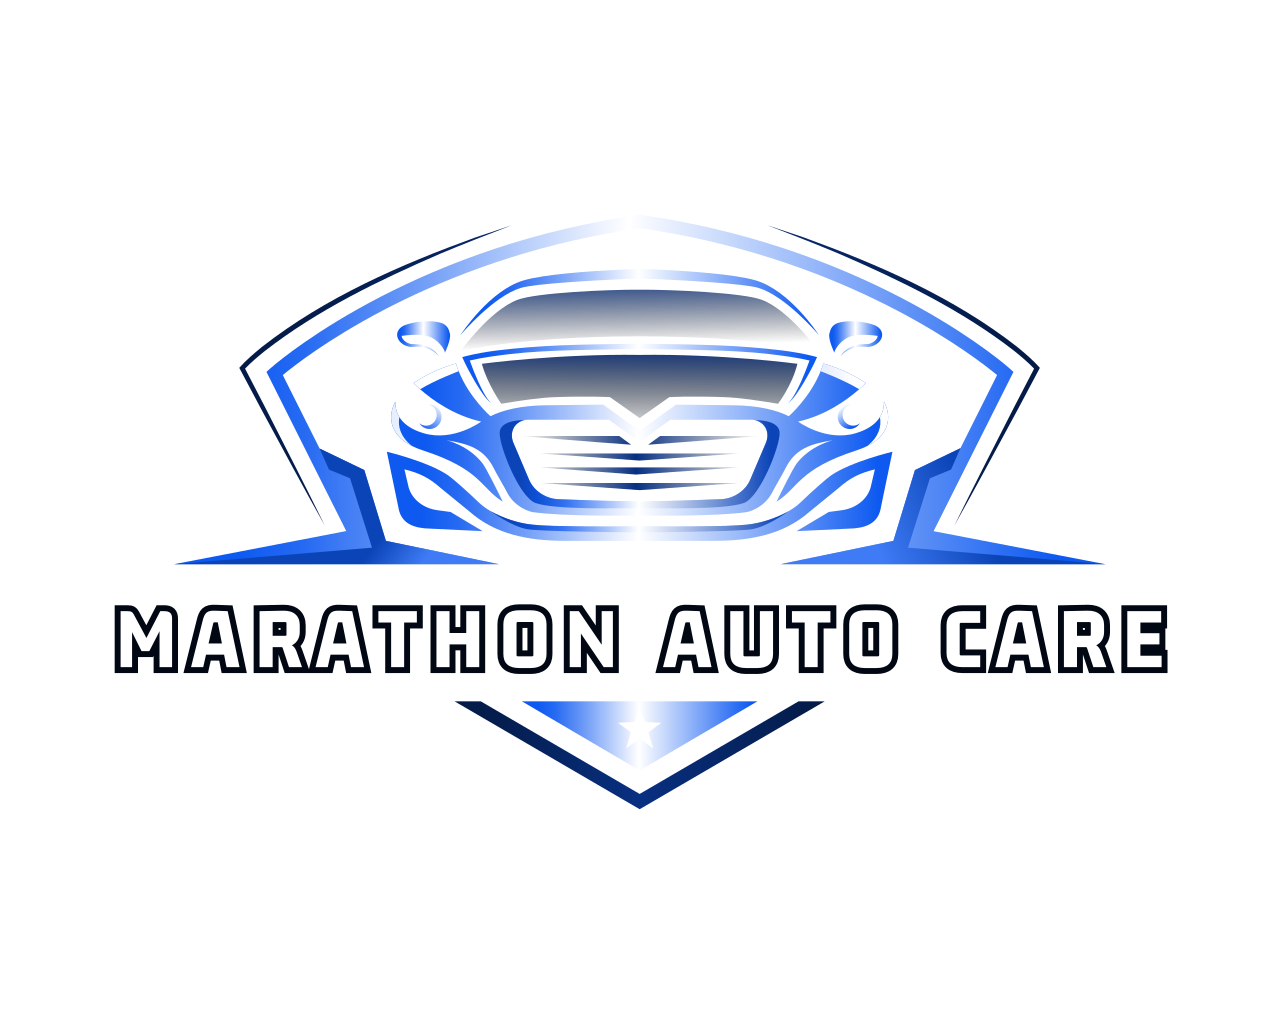 Marathon Auto Care | Mobile Detailing Sioux Falls, SD 